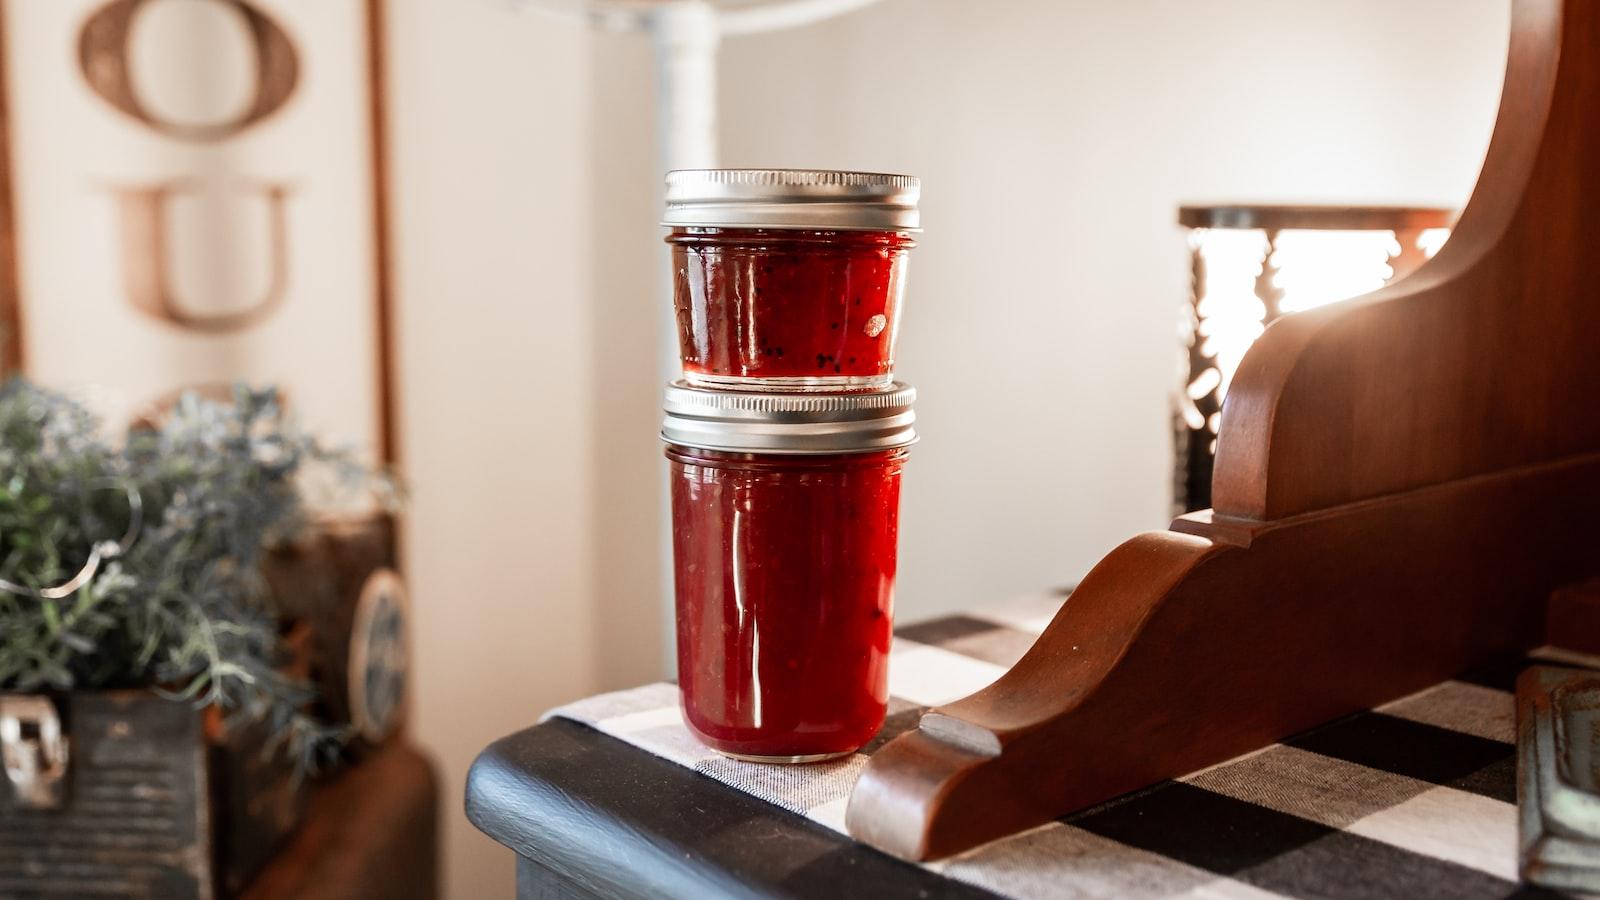 Jam and Jelly Making: A Joyful Culinary Experience